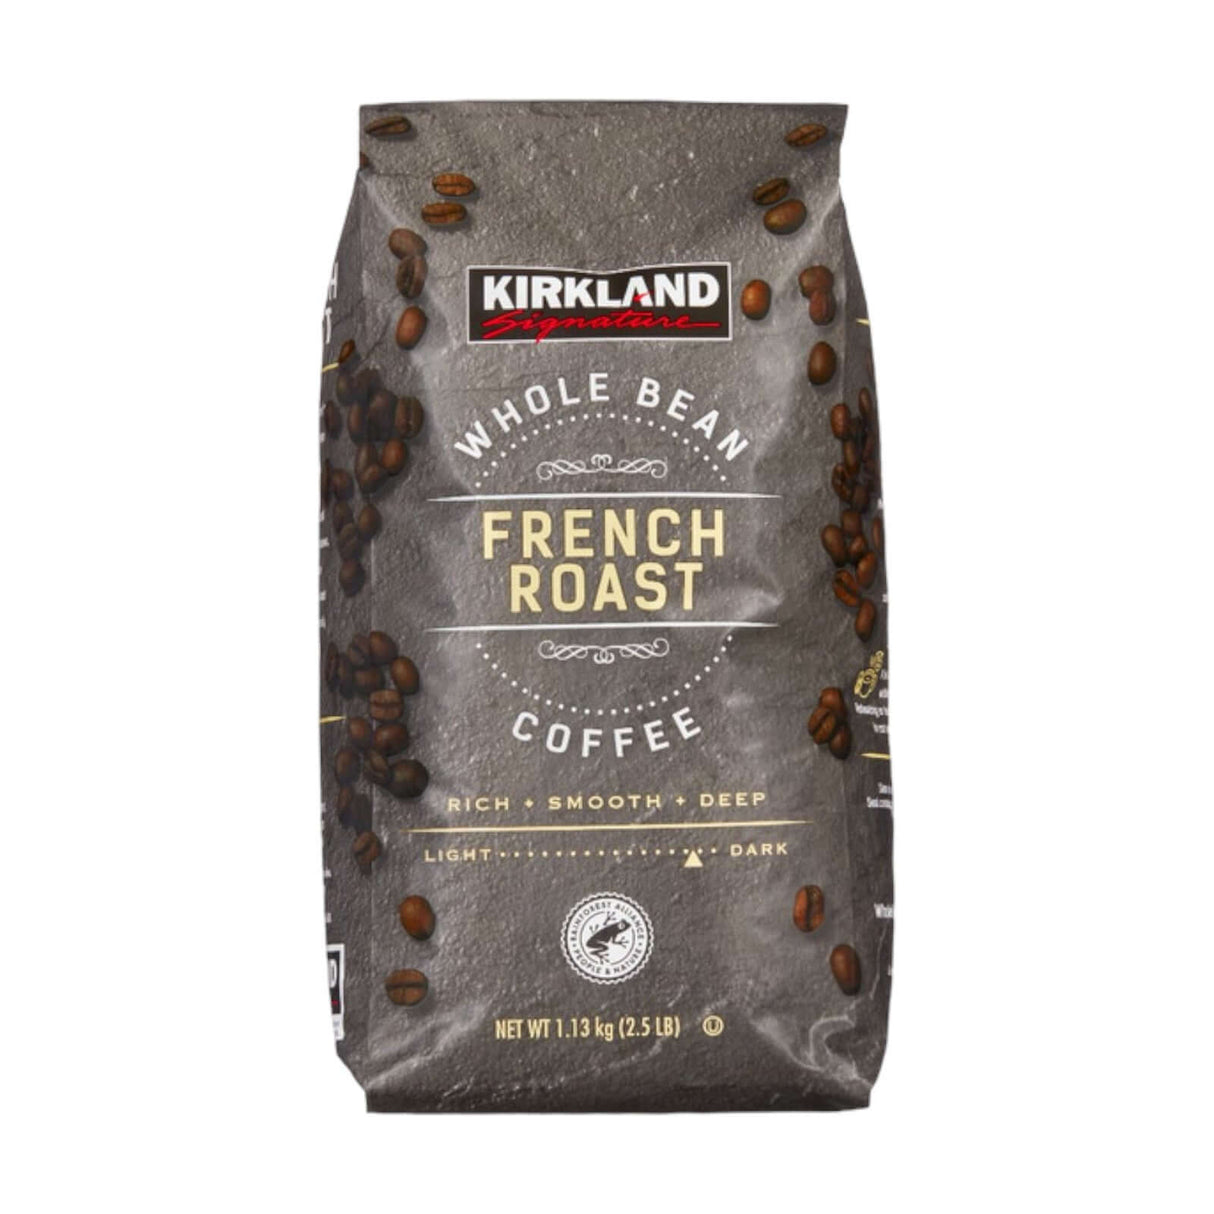 Kirkland Signature Whole Bean Coffee, French Roast